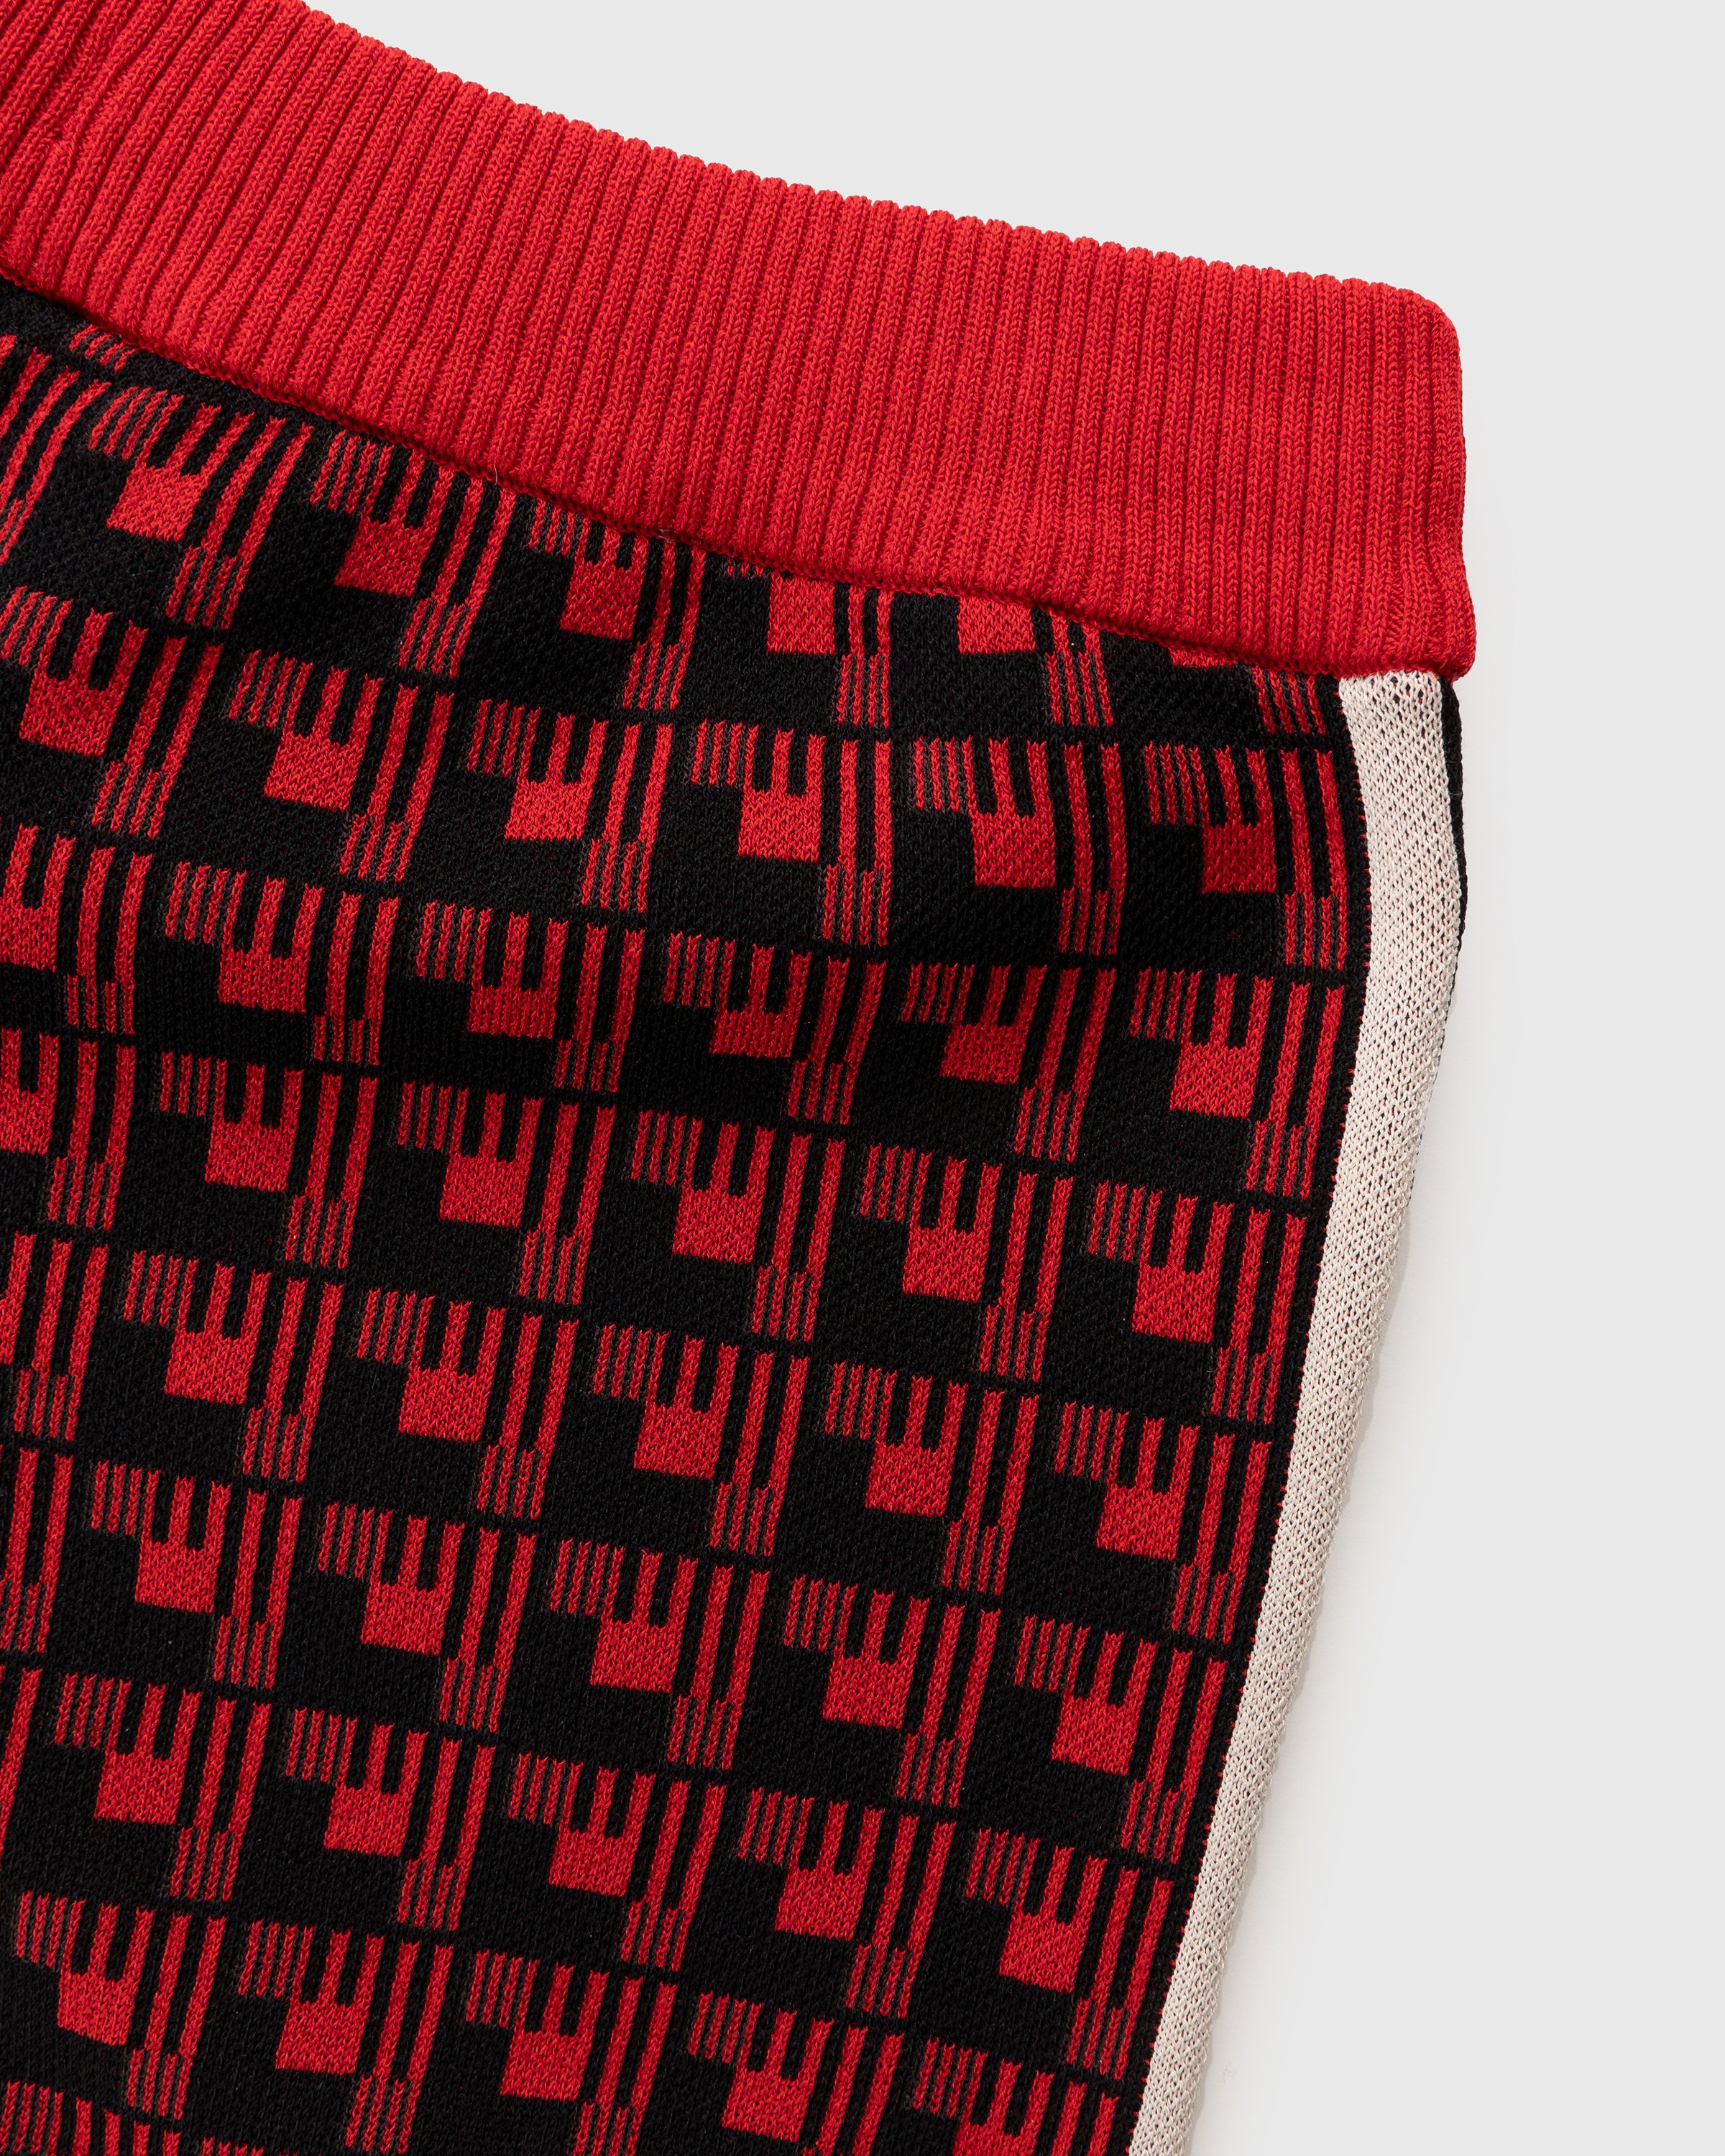 Adidas x Wales Bonner - WB Knit Shorts Scarlet/Black - Clothing - Red - Image 6